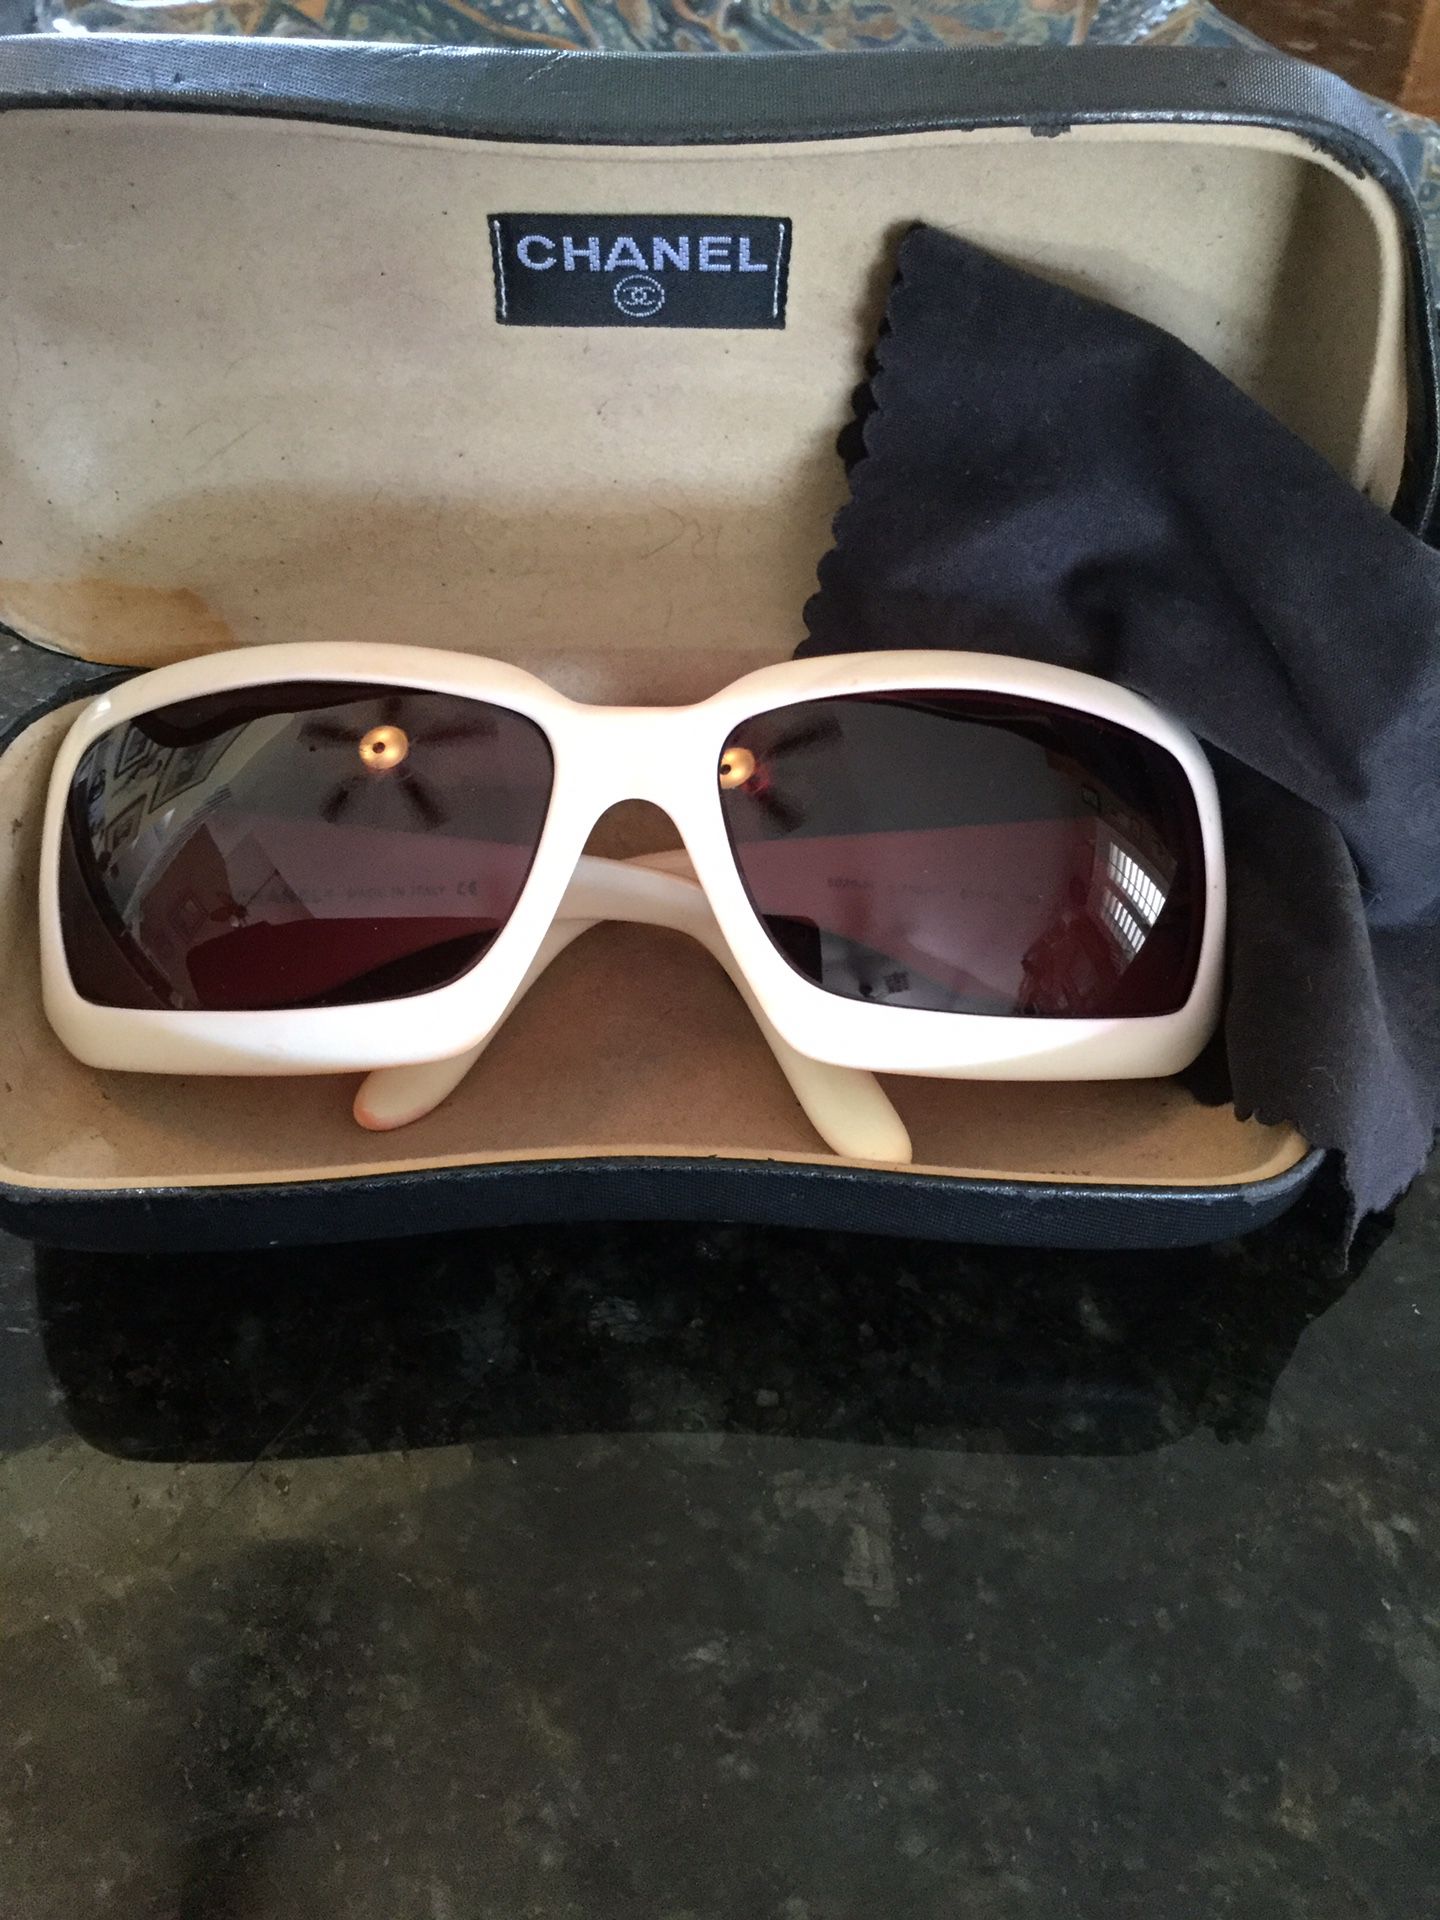 Vintage Chanel Sunglasses for Sale in Fort Lauderdale, FL - OfferUp